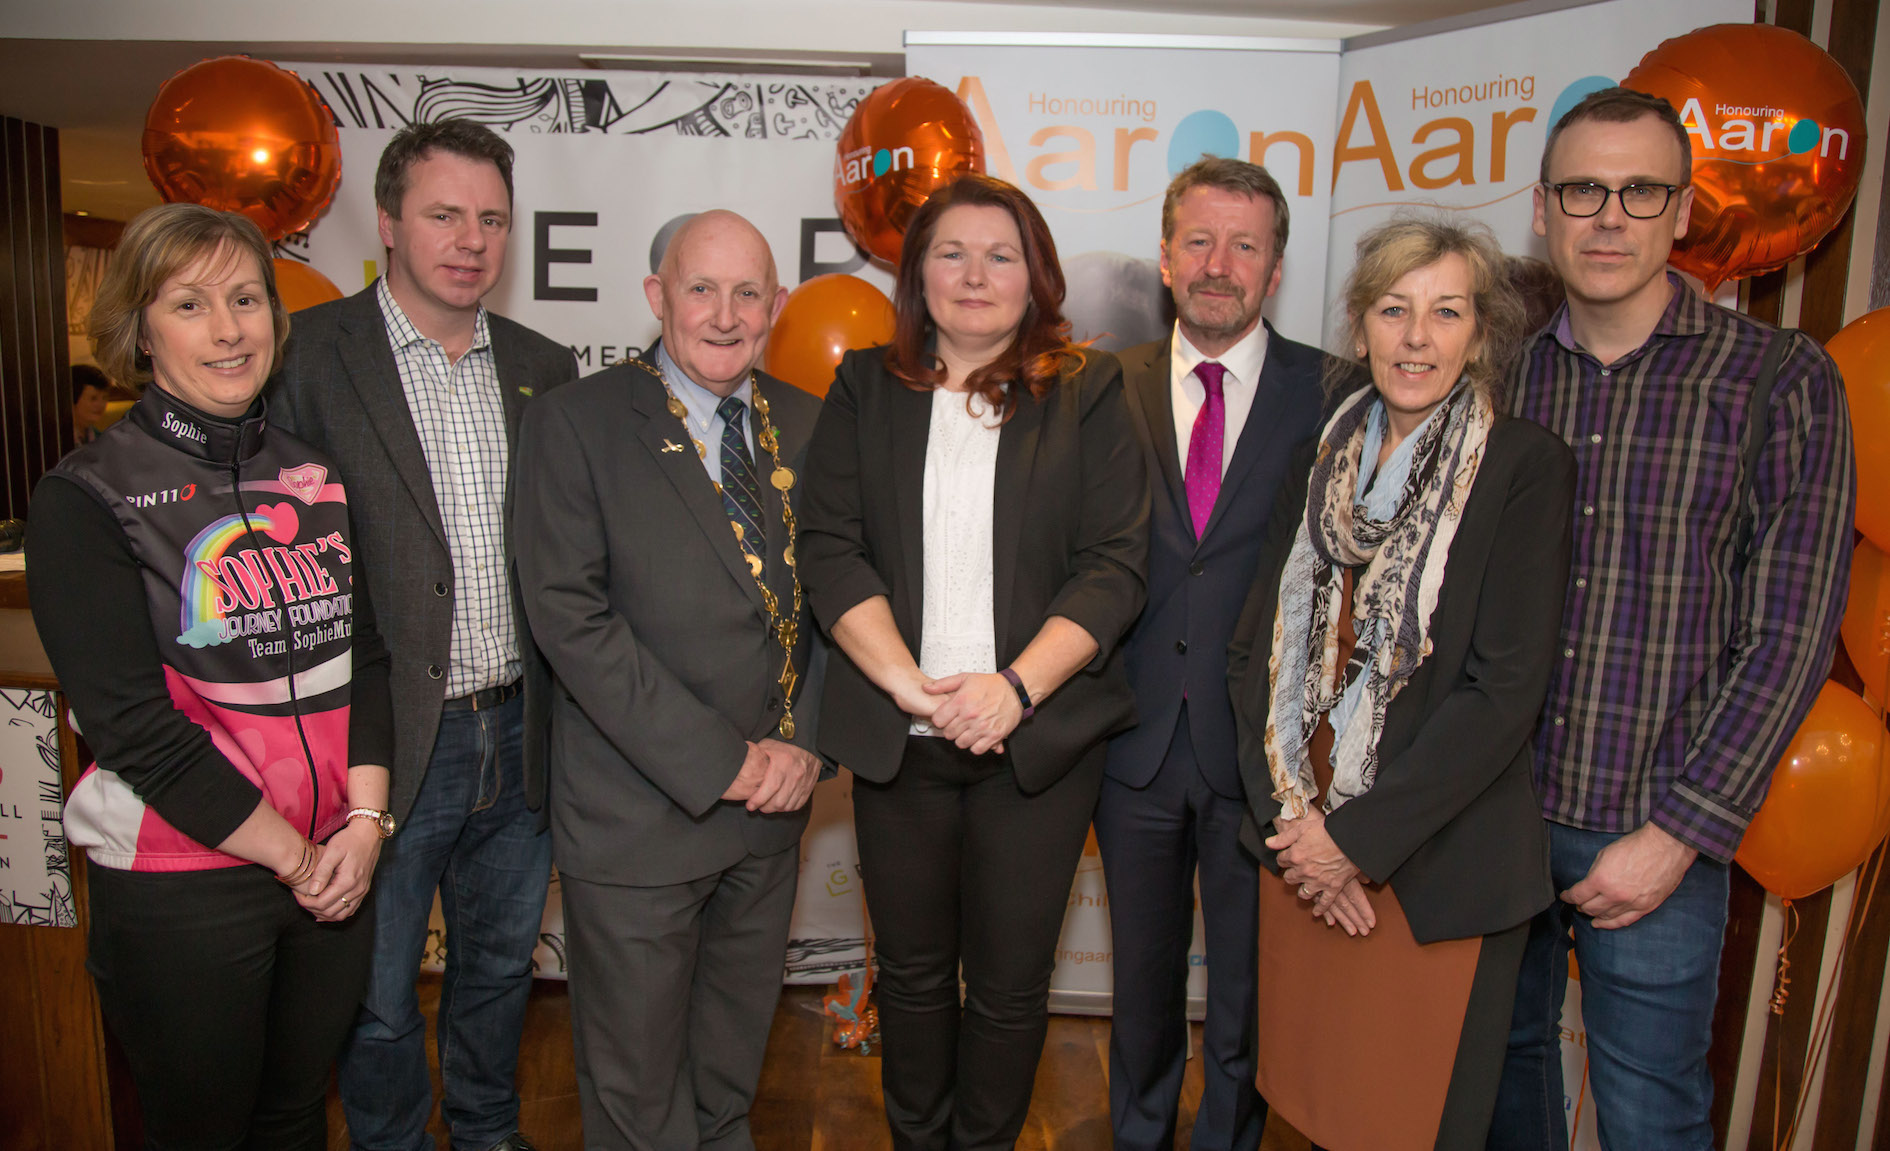 Limerick organisation Honouring Aaron